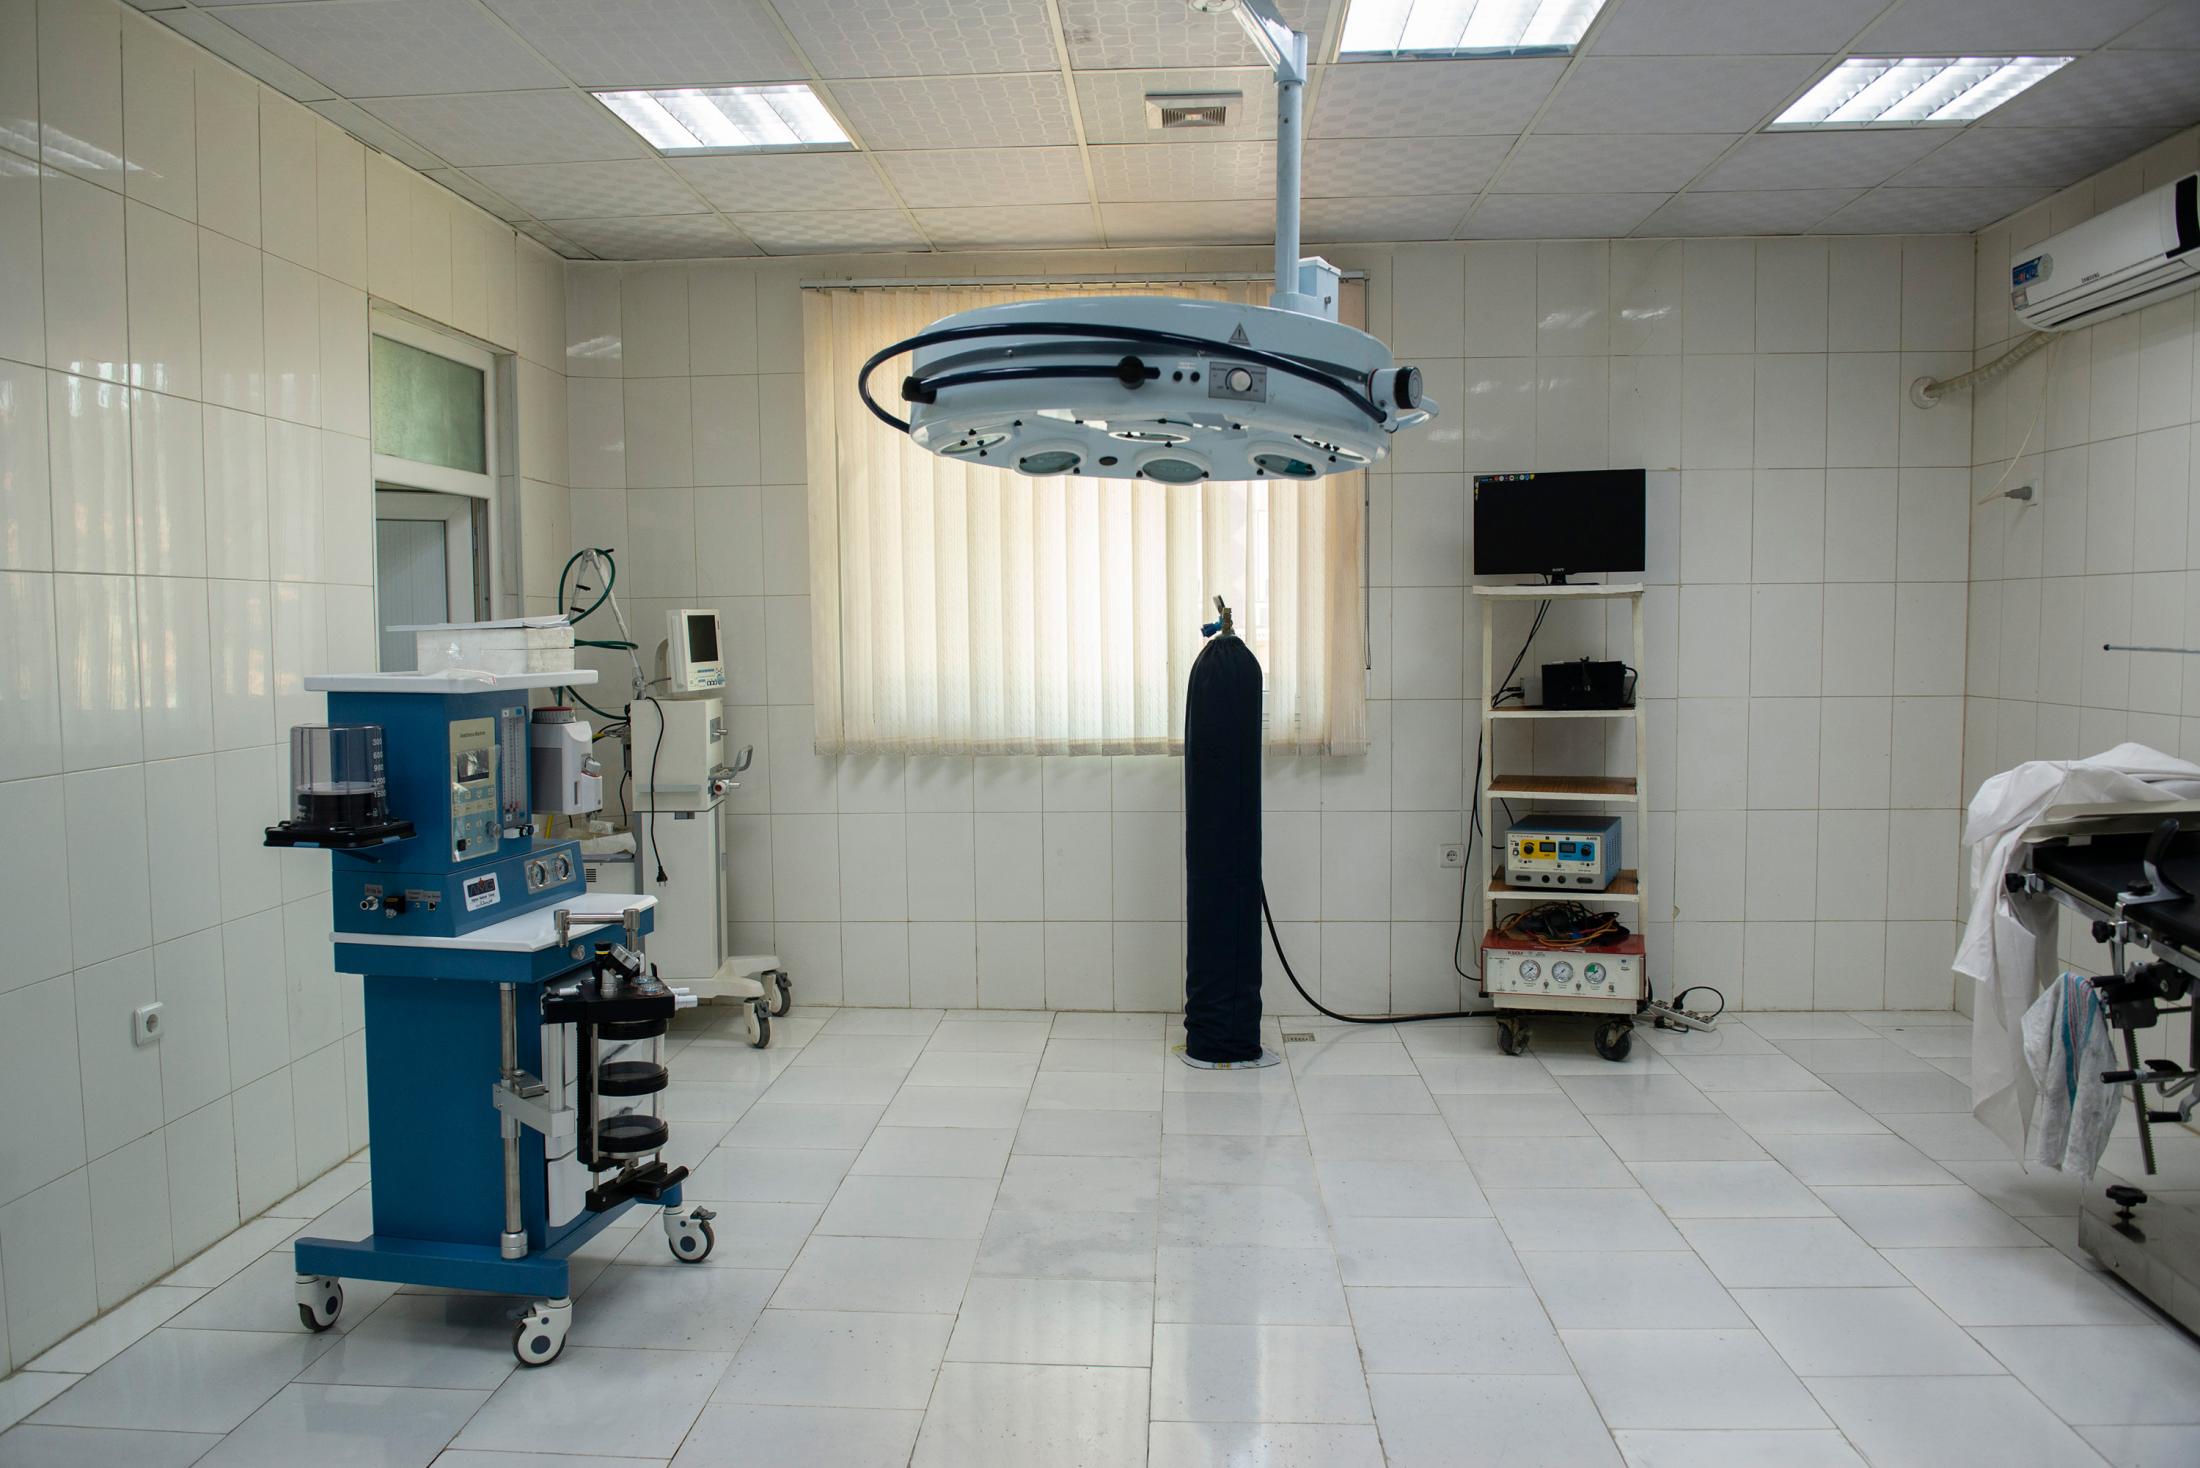 The Silent Death - KABUL | AFGHANISTAN | 12/20/17 | An empty surgical room...